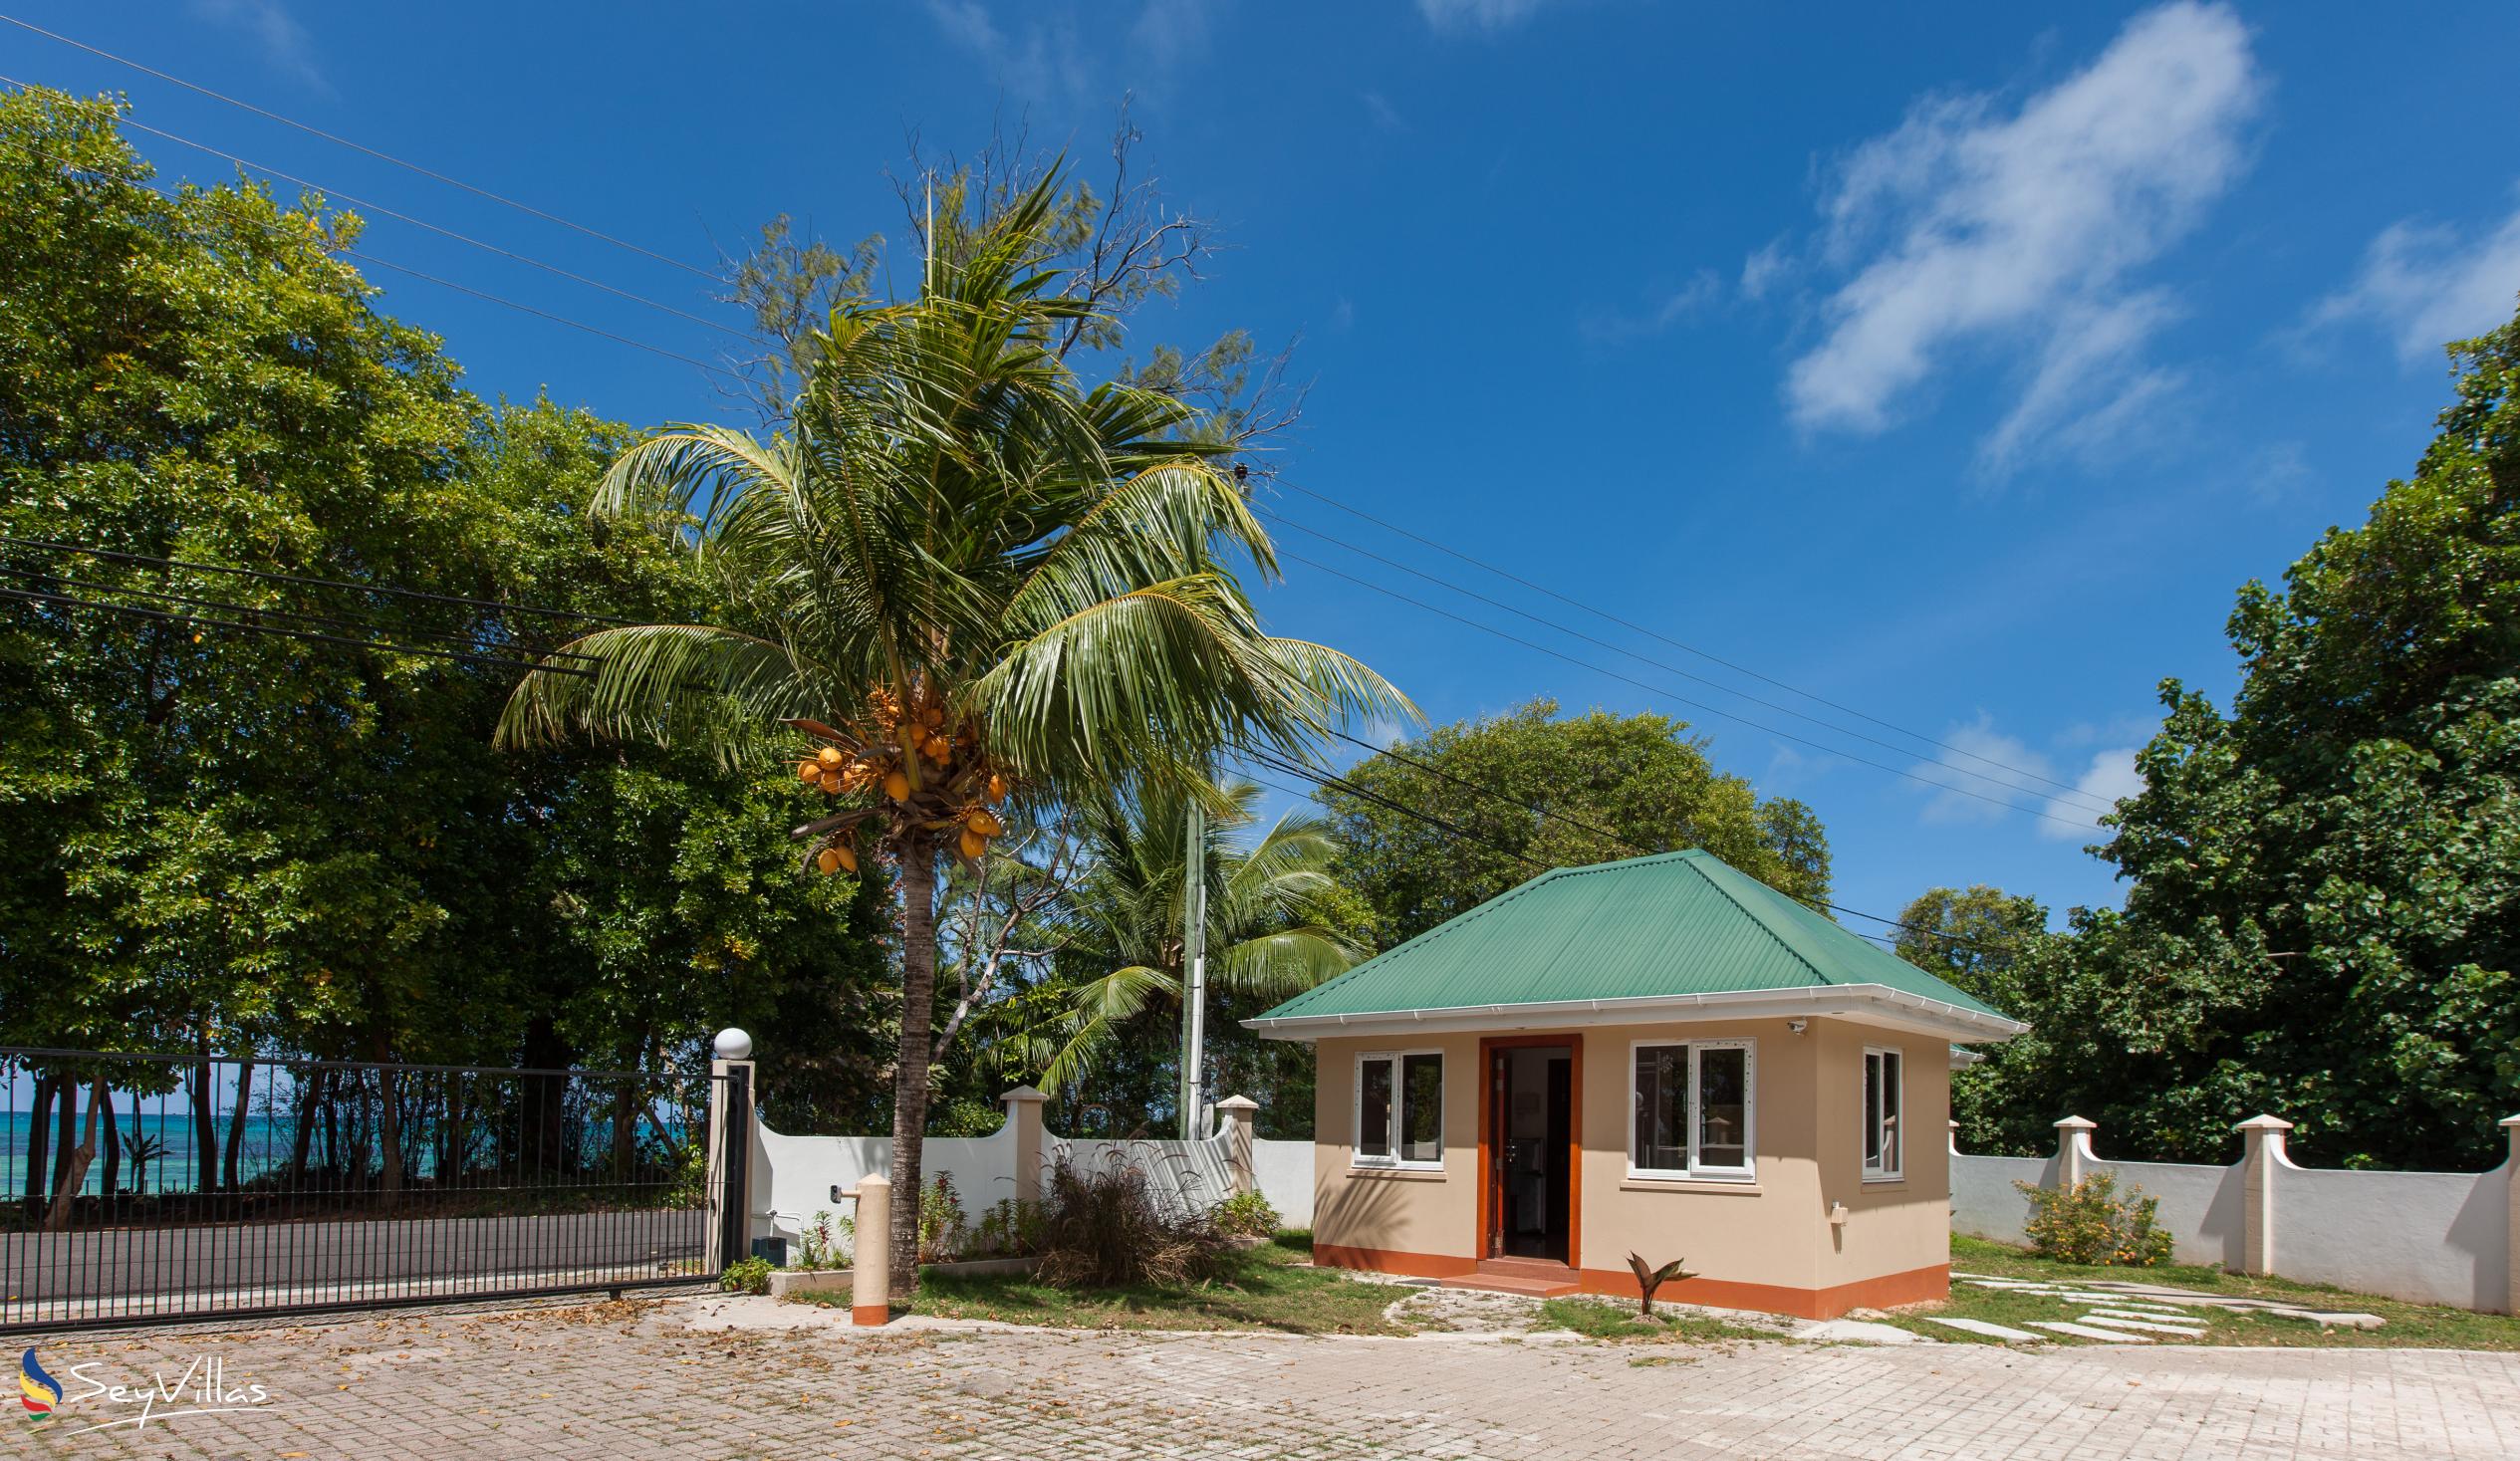 Foto 65: YASAD Luxury Beach Residence - Studio 1 chambre avec salle de bain attenante - Praslin (Seychelles)